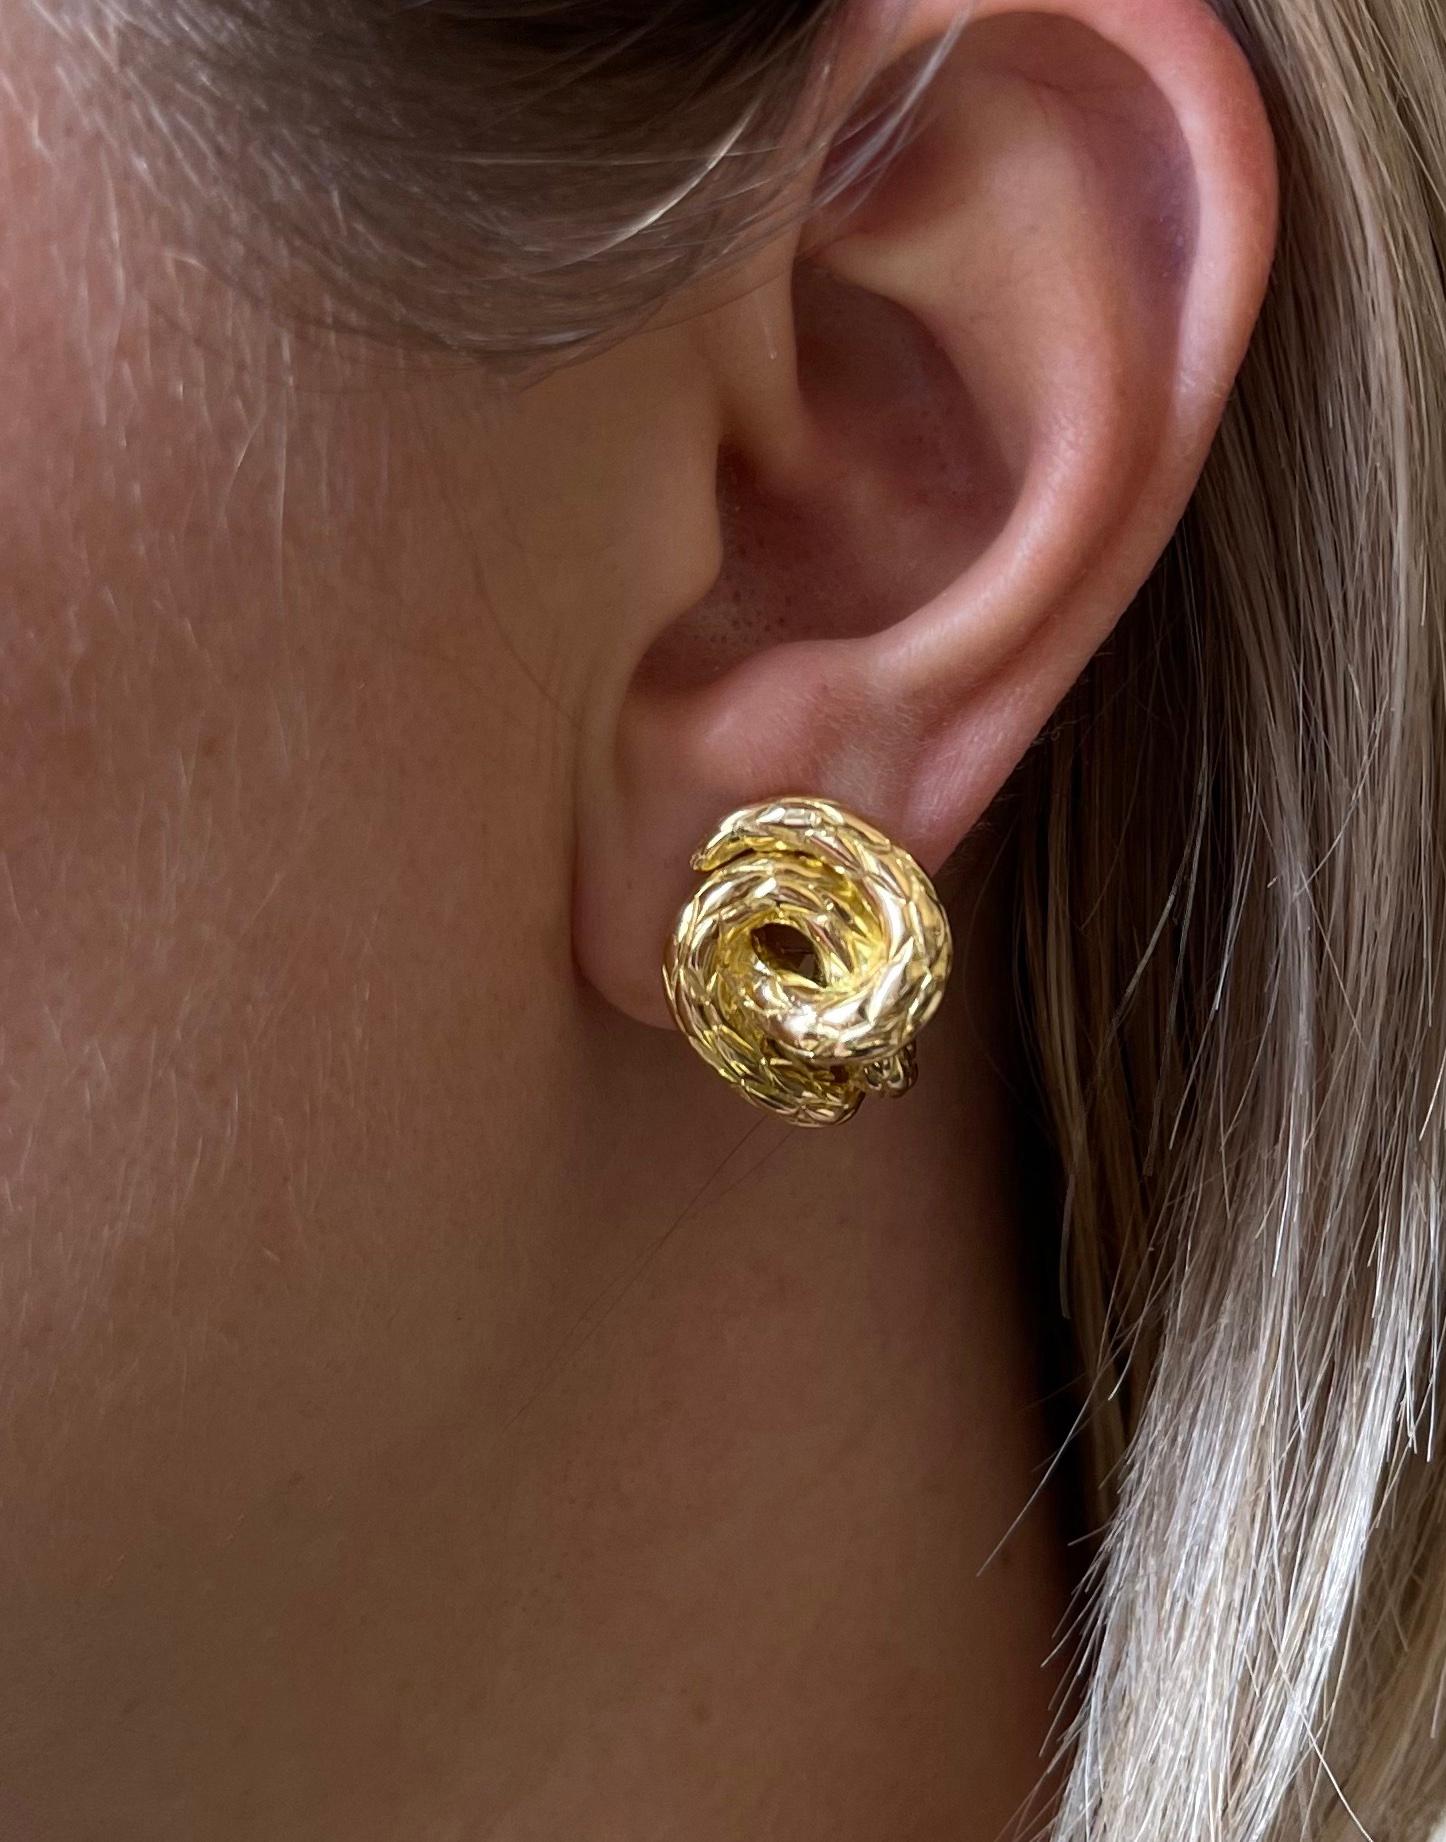 Pair of Cartier Paris 18k yellow gold earrings, featuring interlocked design. Earrings measure 7/8